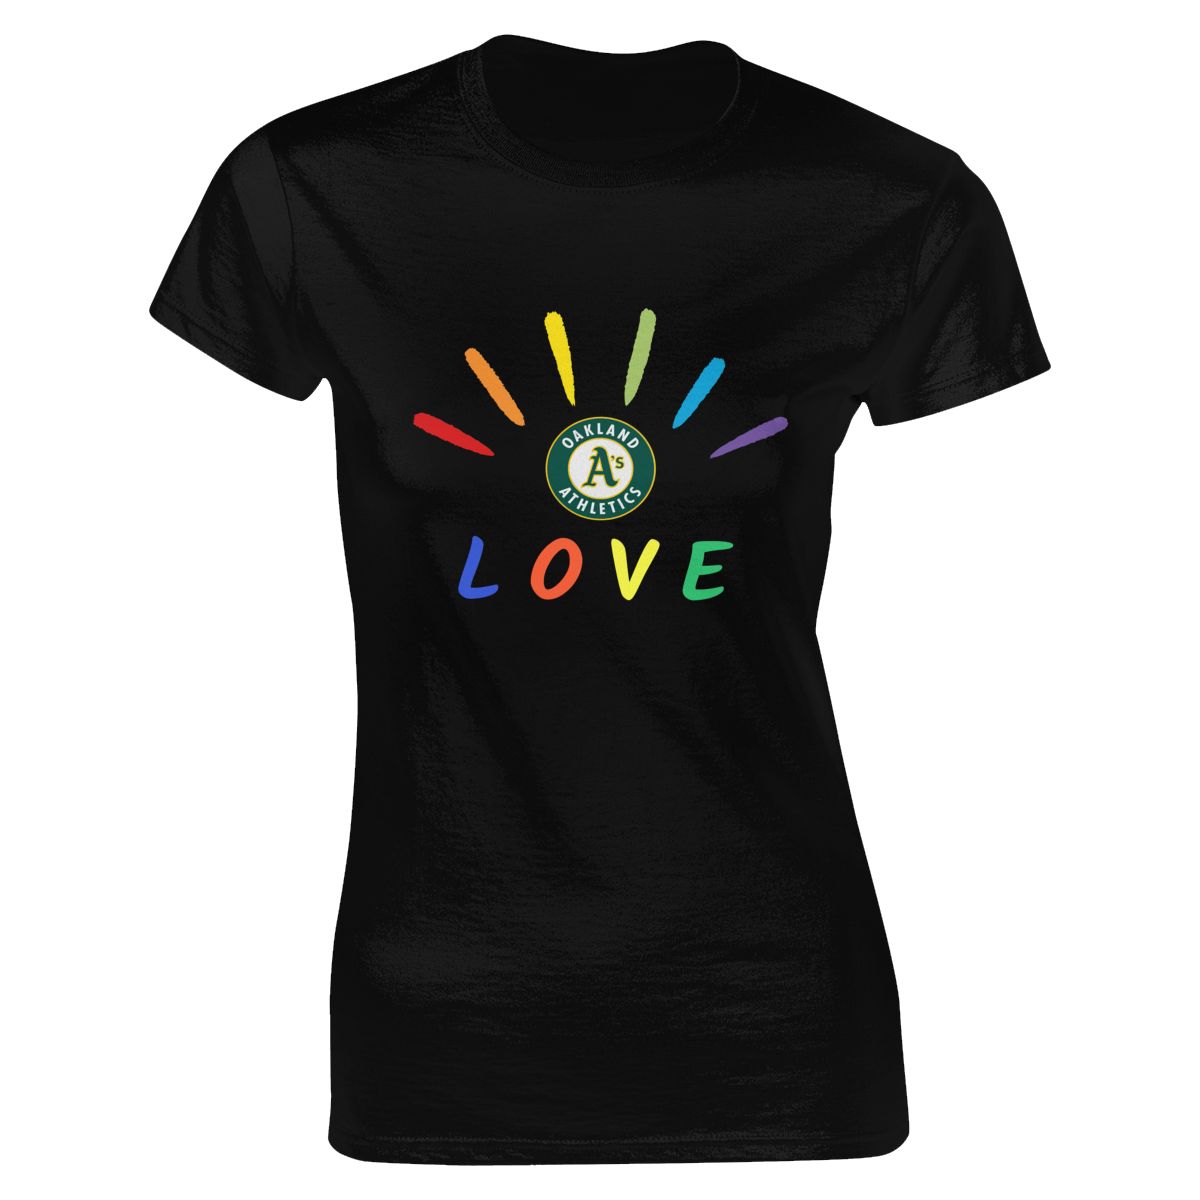 Oakland Athletics Pride Love Women's Soft Cotton T-Shirt